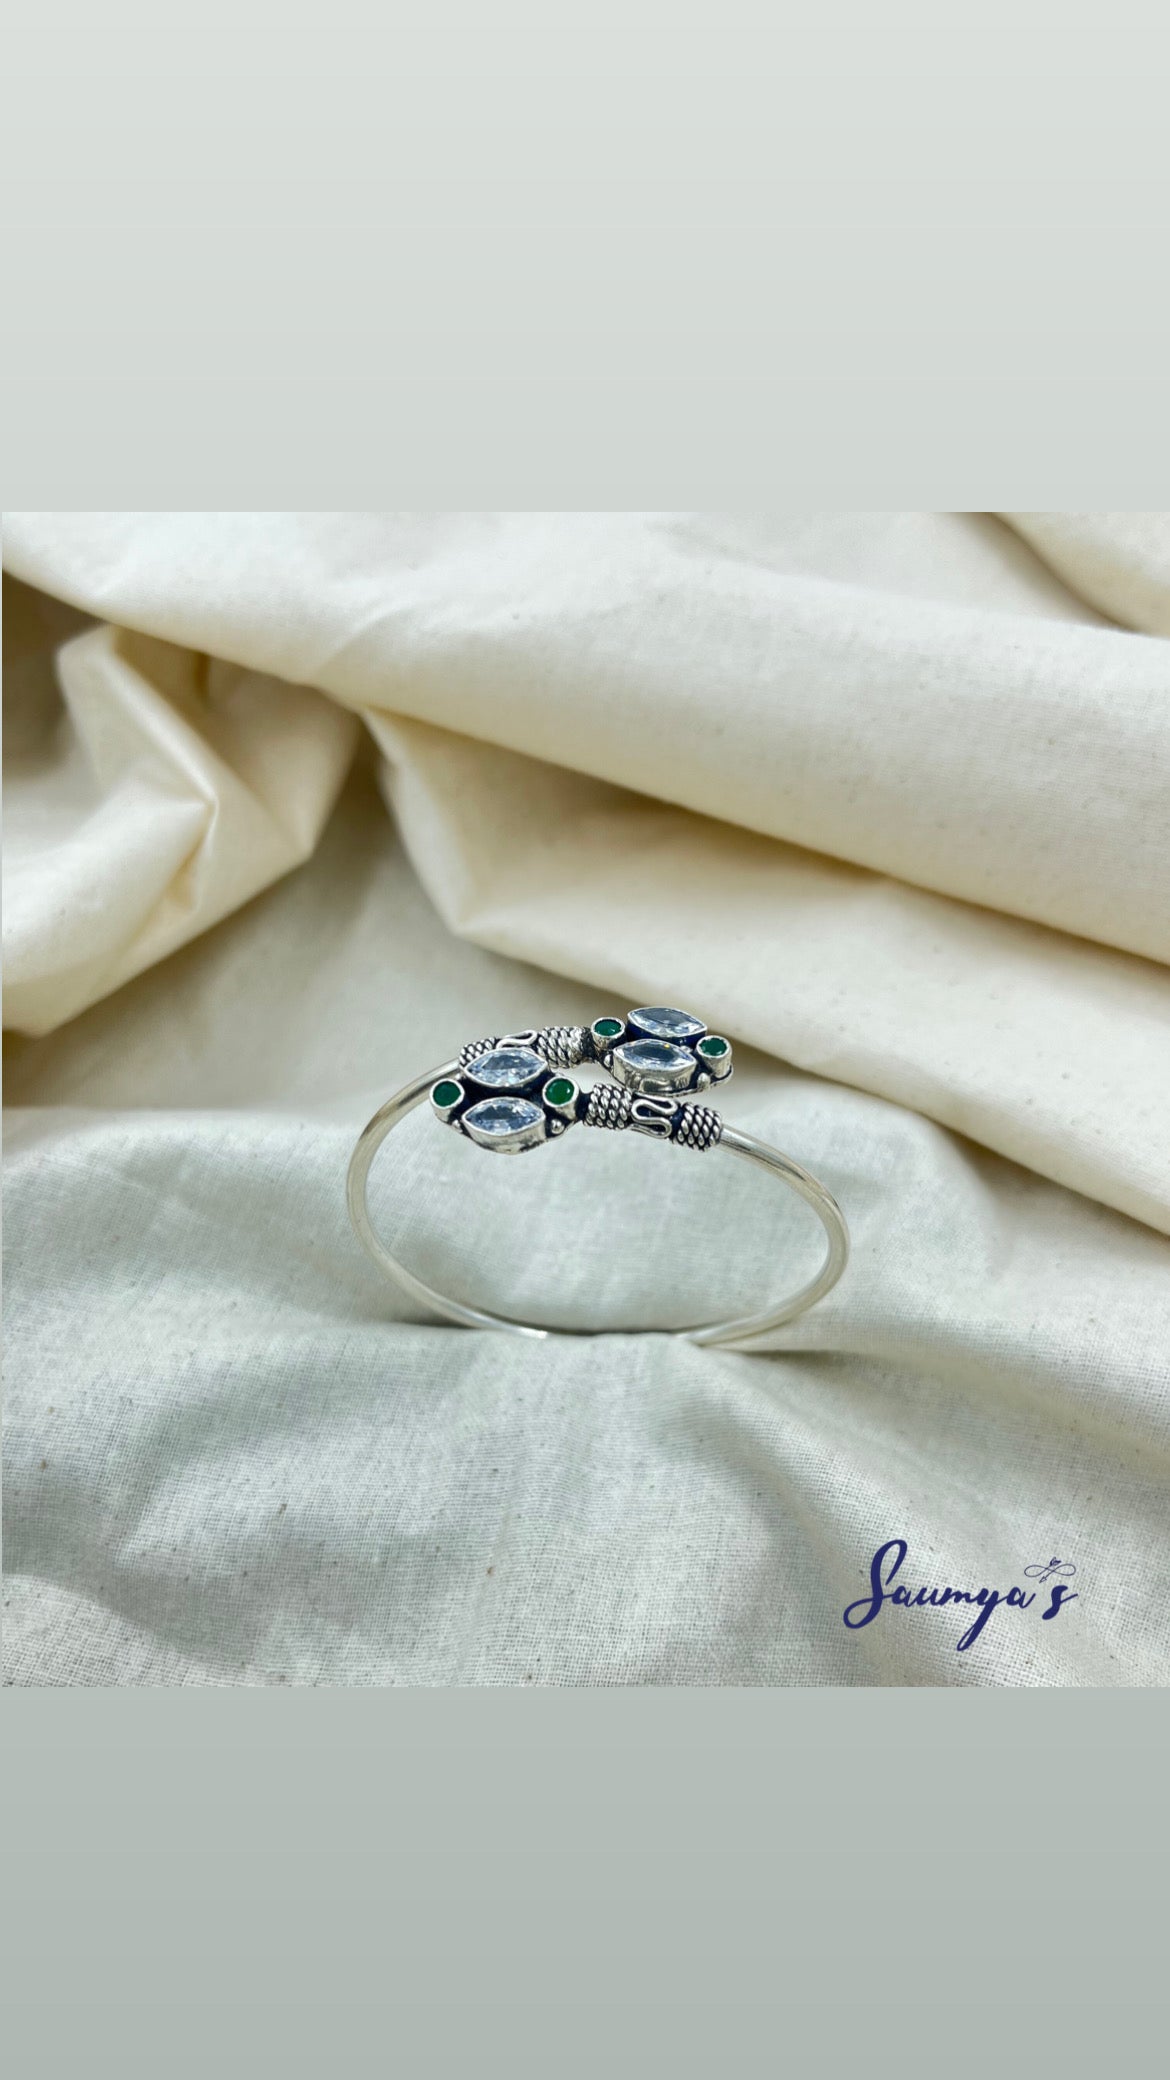 Beautiful Zirconia & Emerald Cut Stone Bracelet!